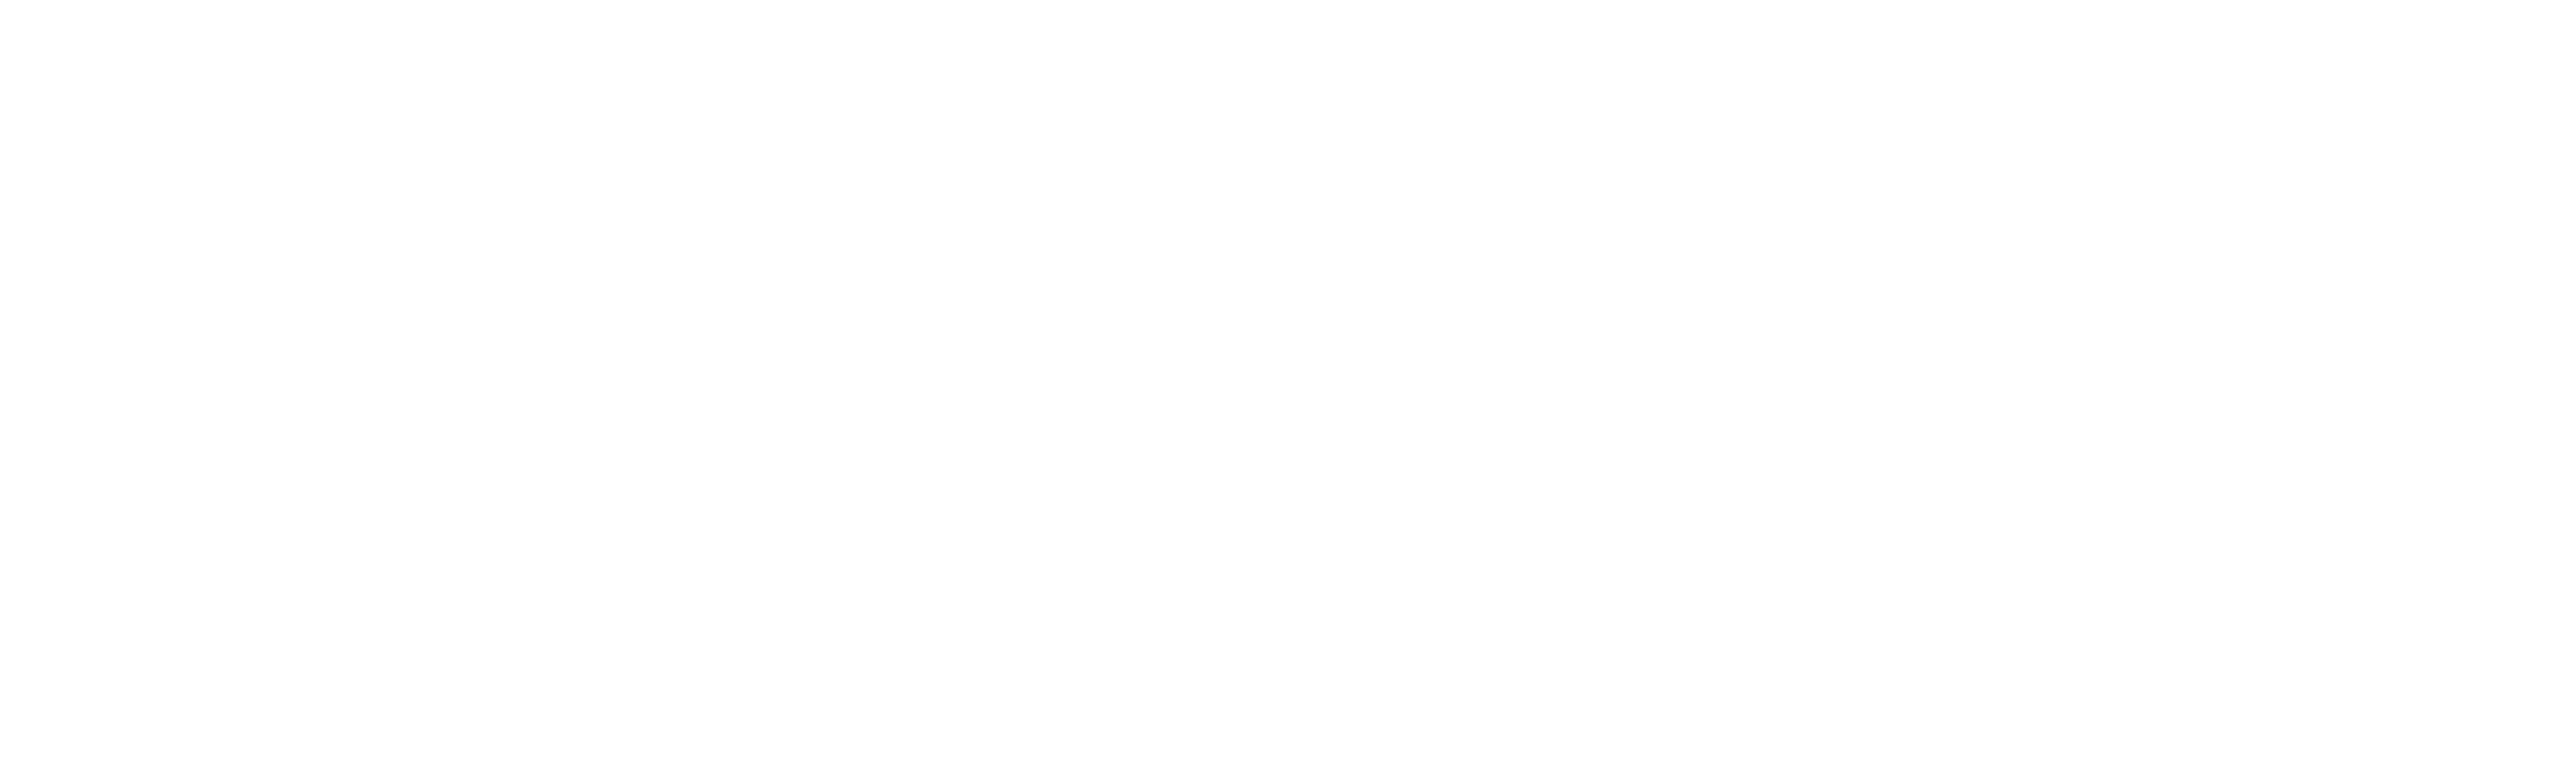 Dunnes Stores Logo